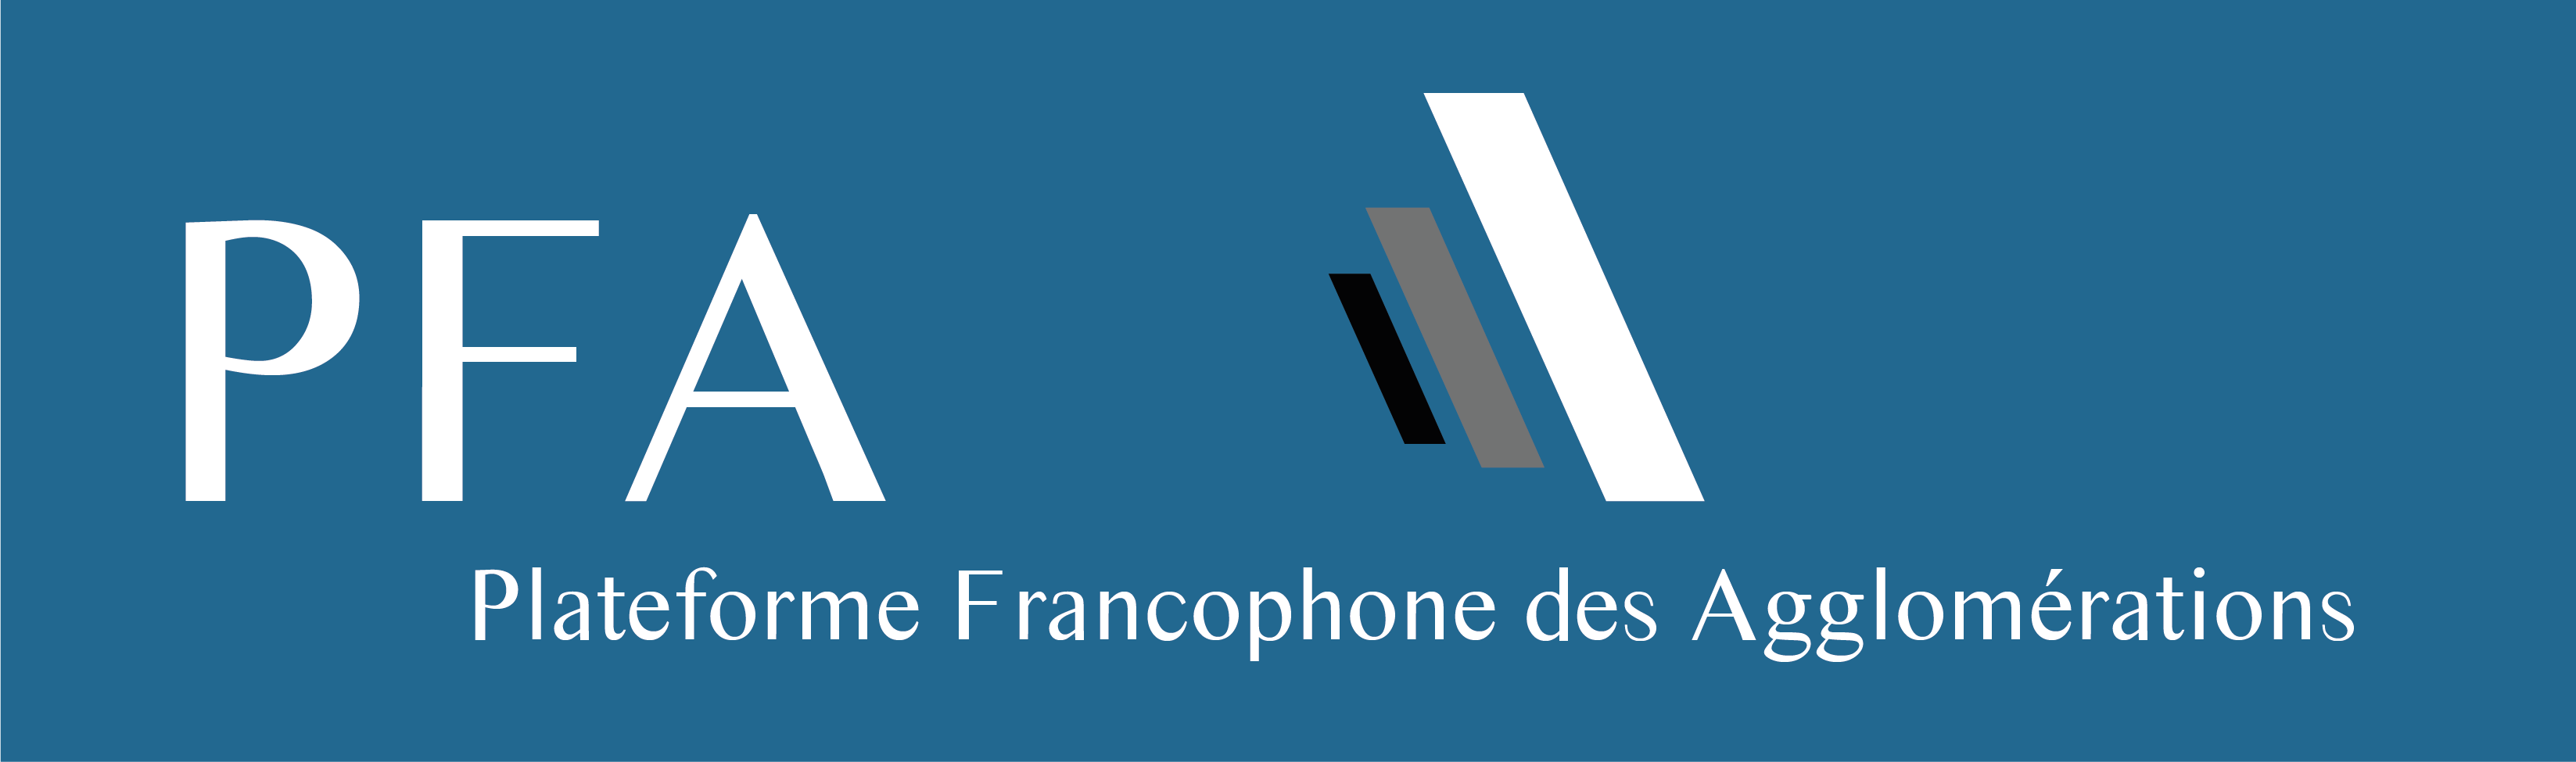 Plateforme Francophone des Agglomérations